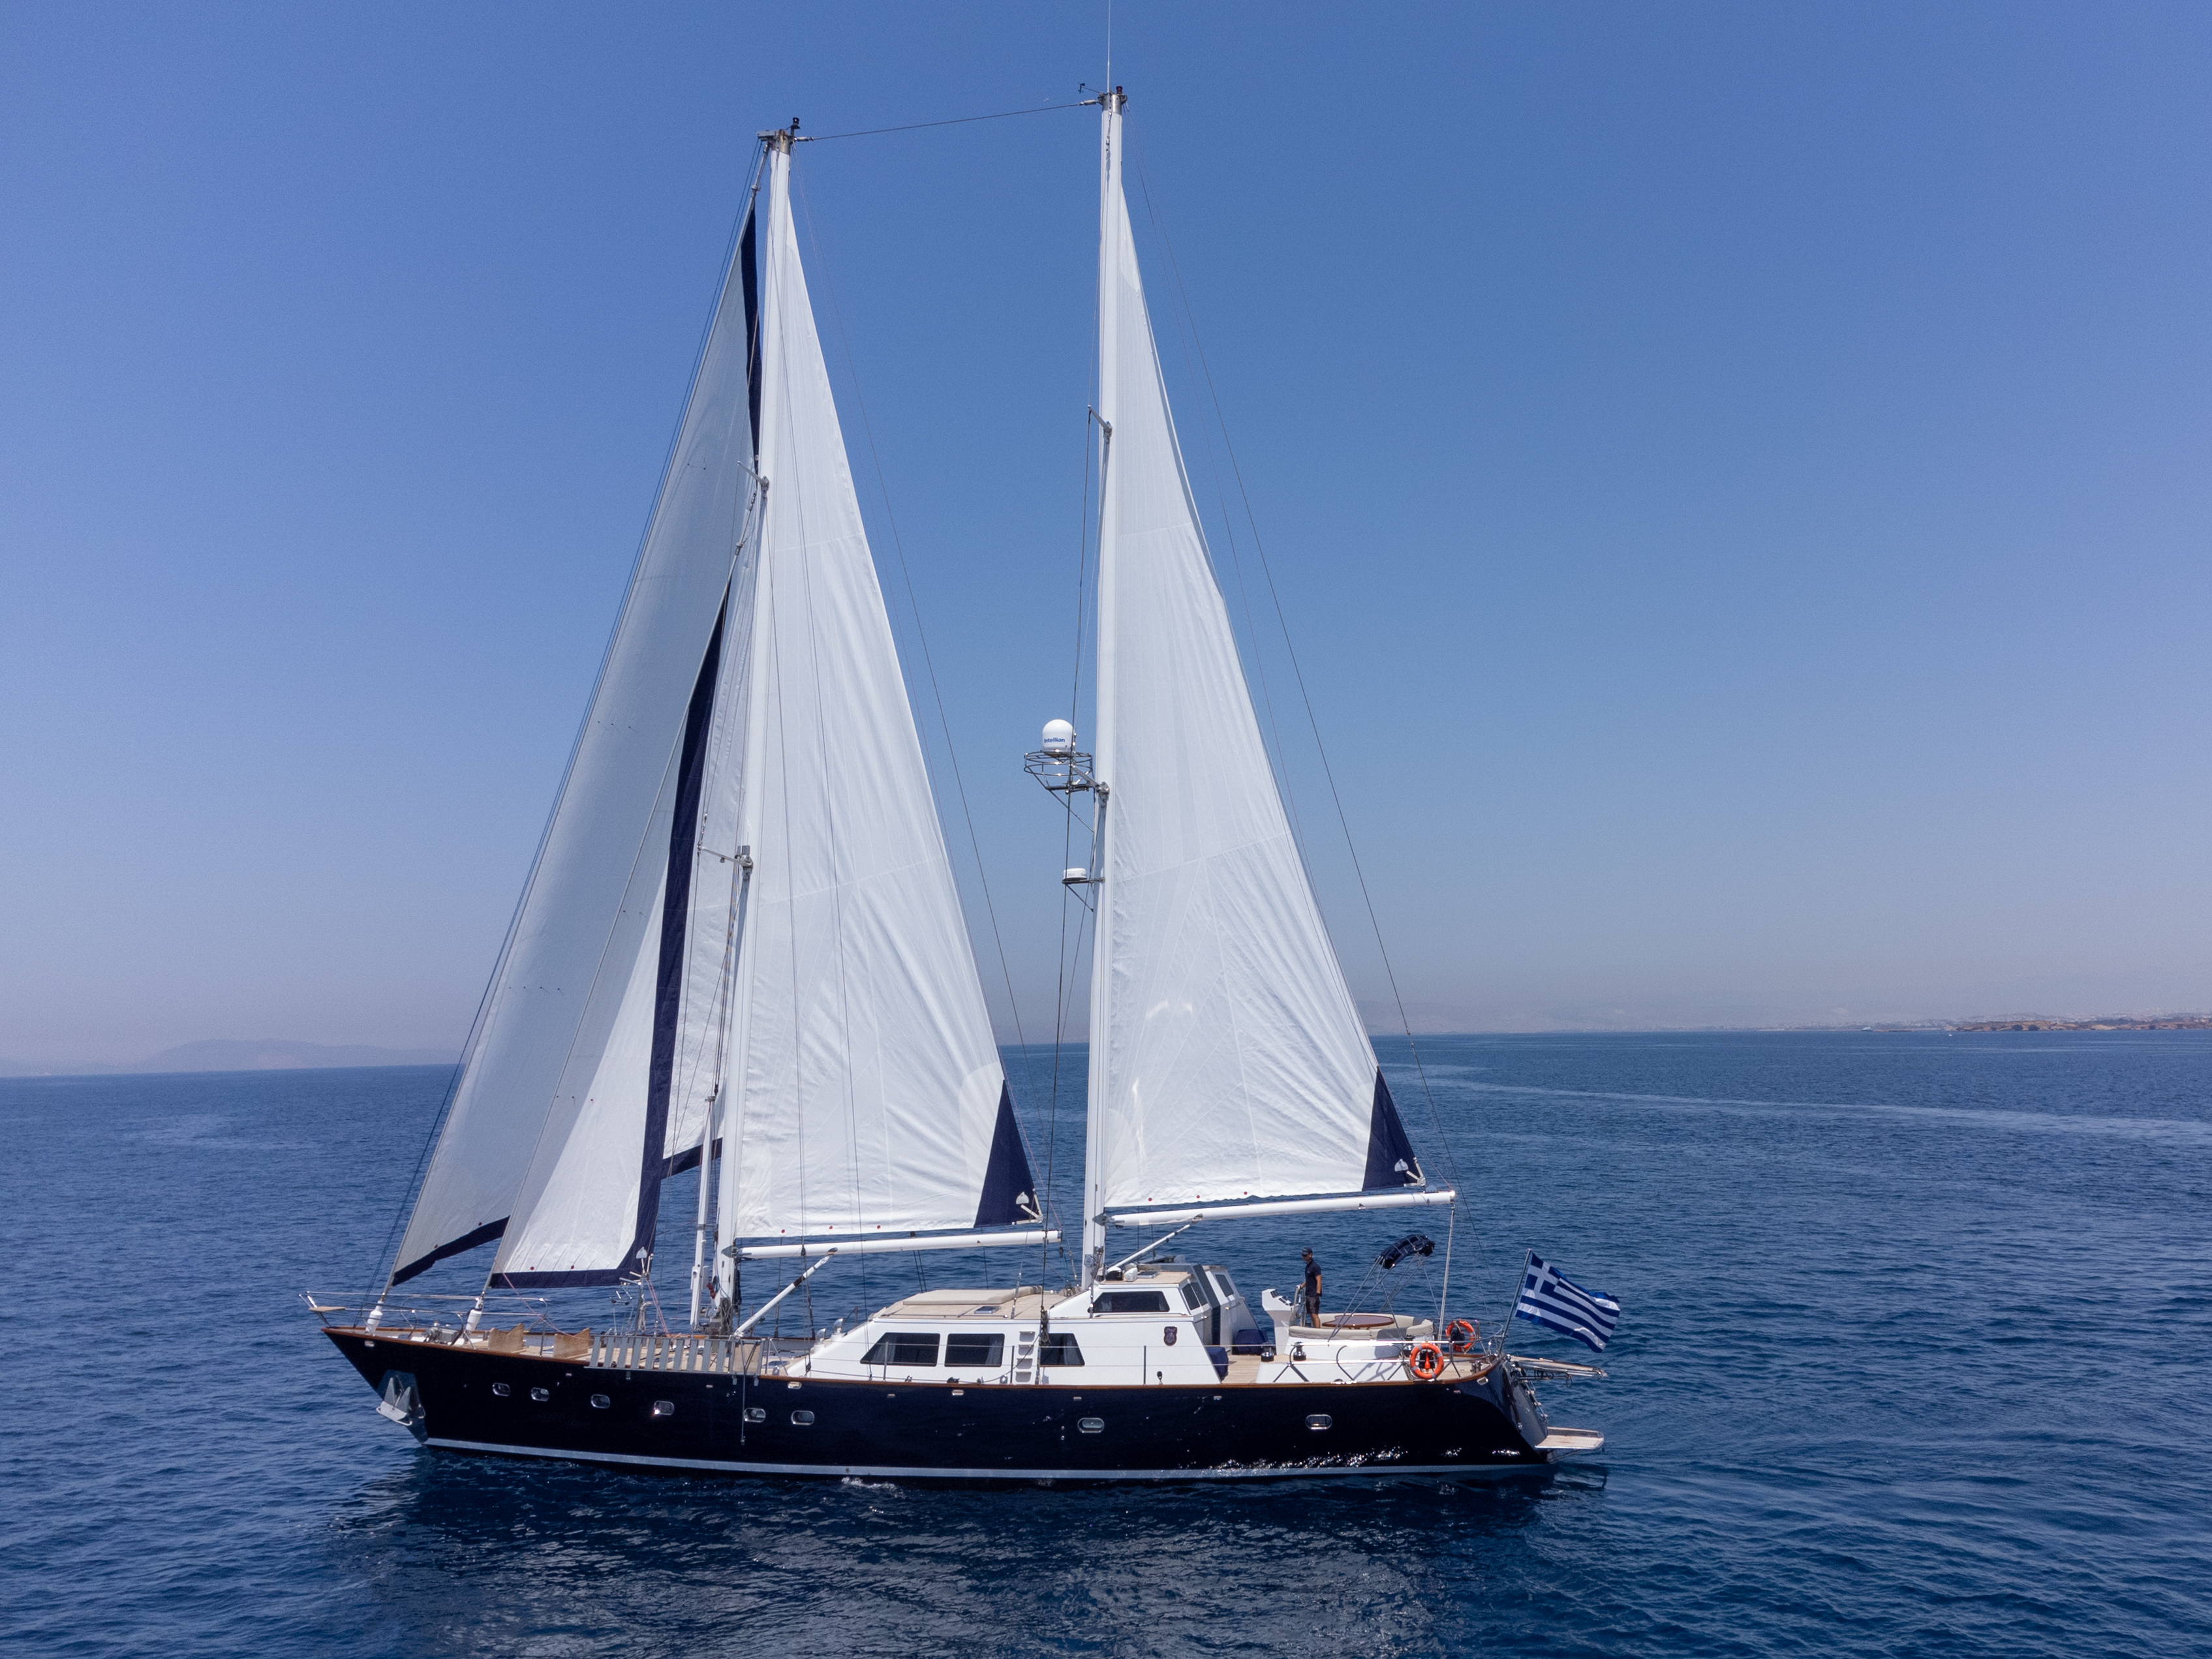 CCYD 85 - RIB hire worldwide & Boat hire in Greece Athens and Saronic Gulf Athens Piraeus Marina Zea 5